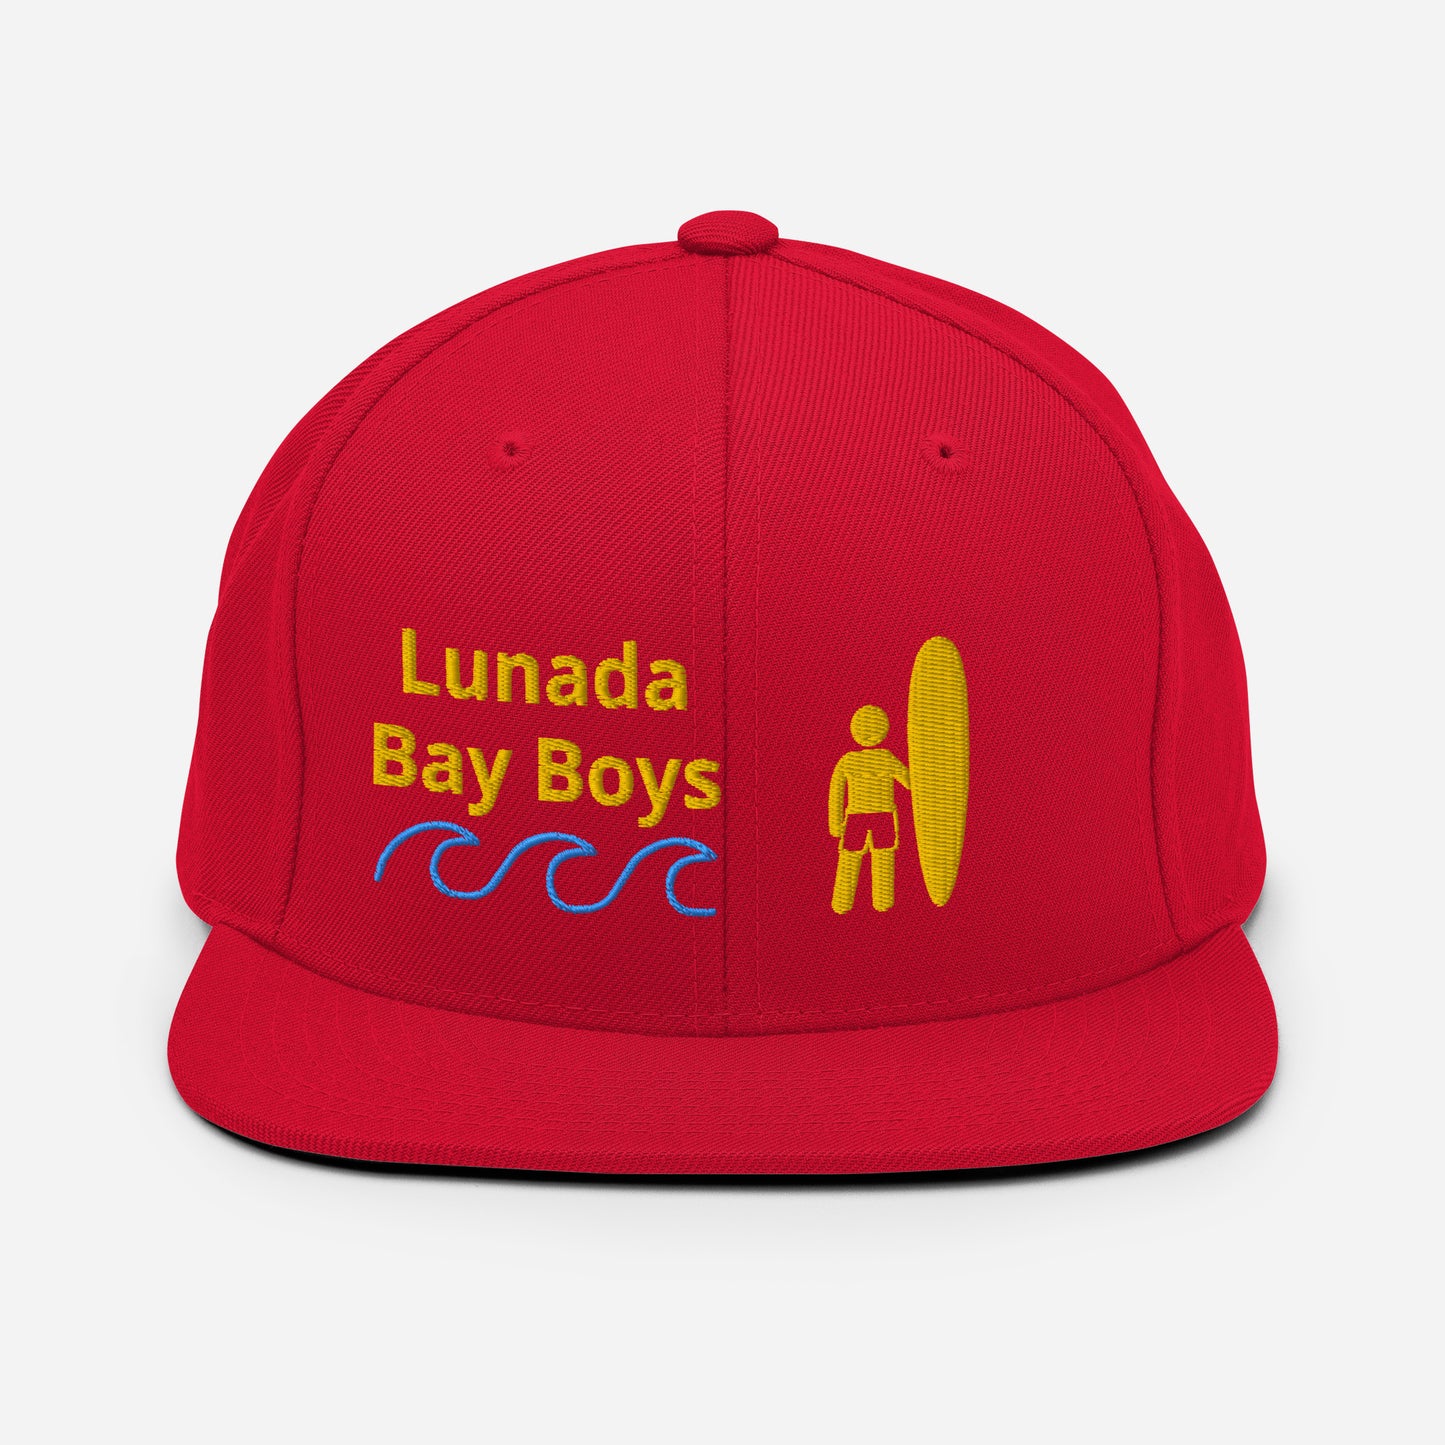 Lunada Bay Boys Palos Verdes  - California - South Bay - Snapback Hat - Surfing Style PVE (Bay Boy Picture on Back)